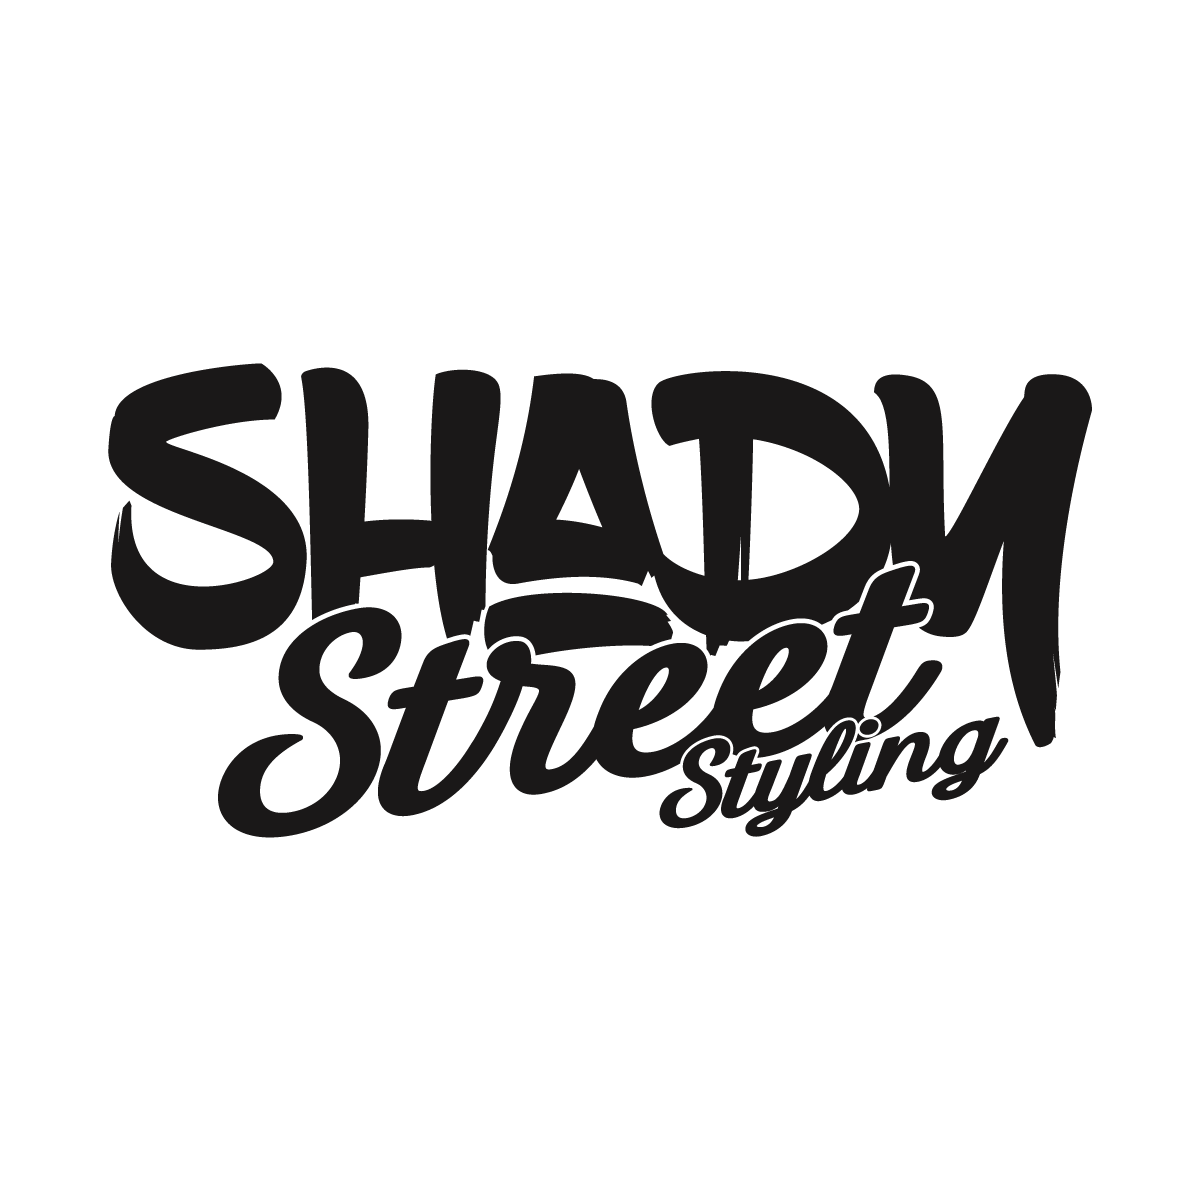 Shady Street Styling